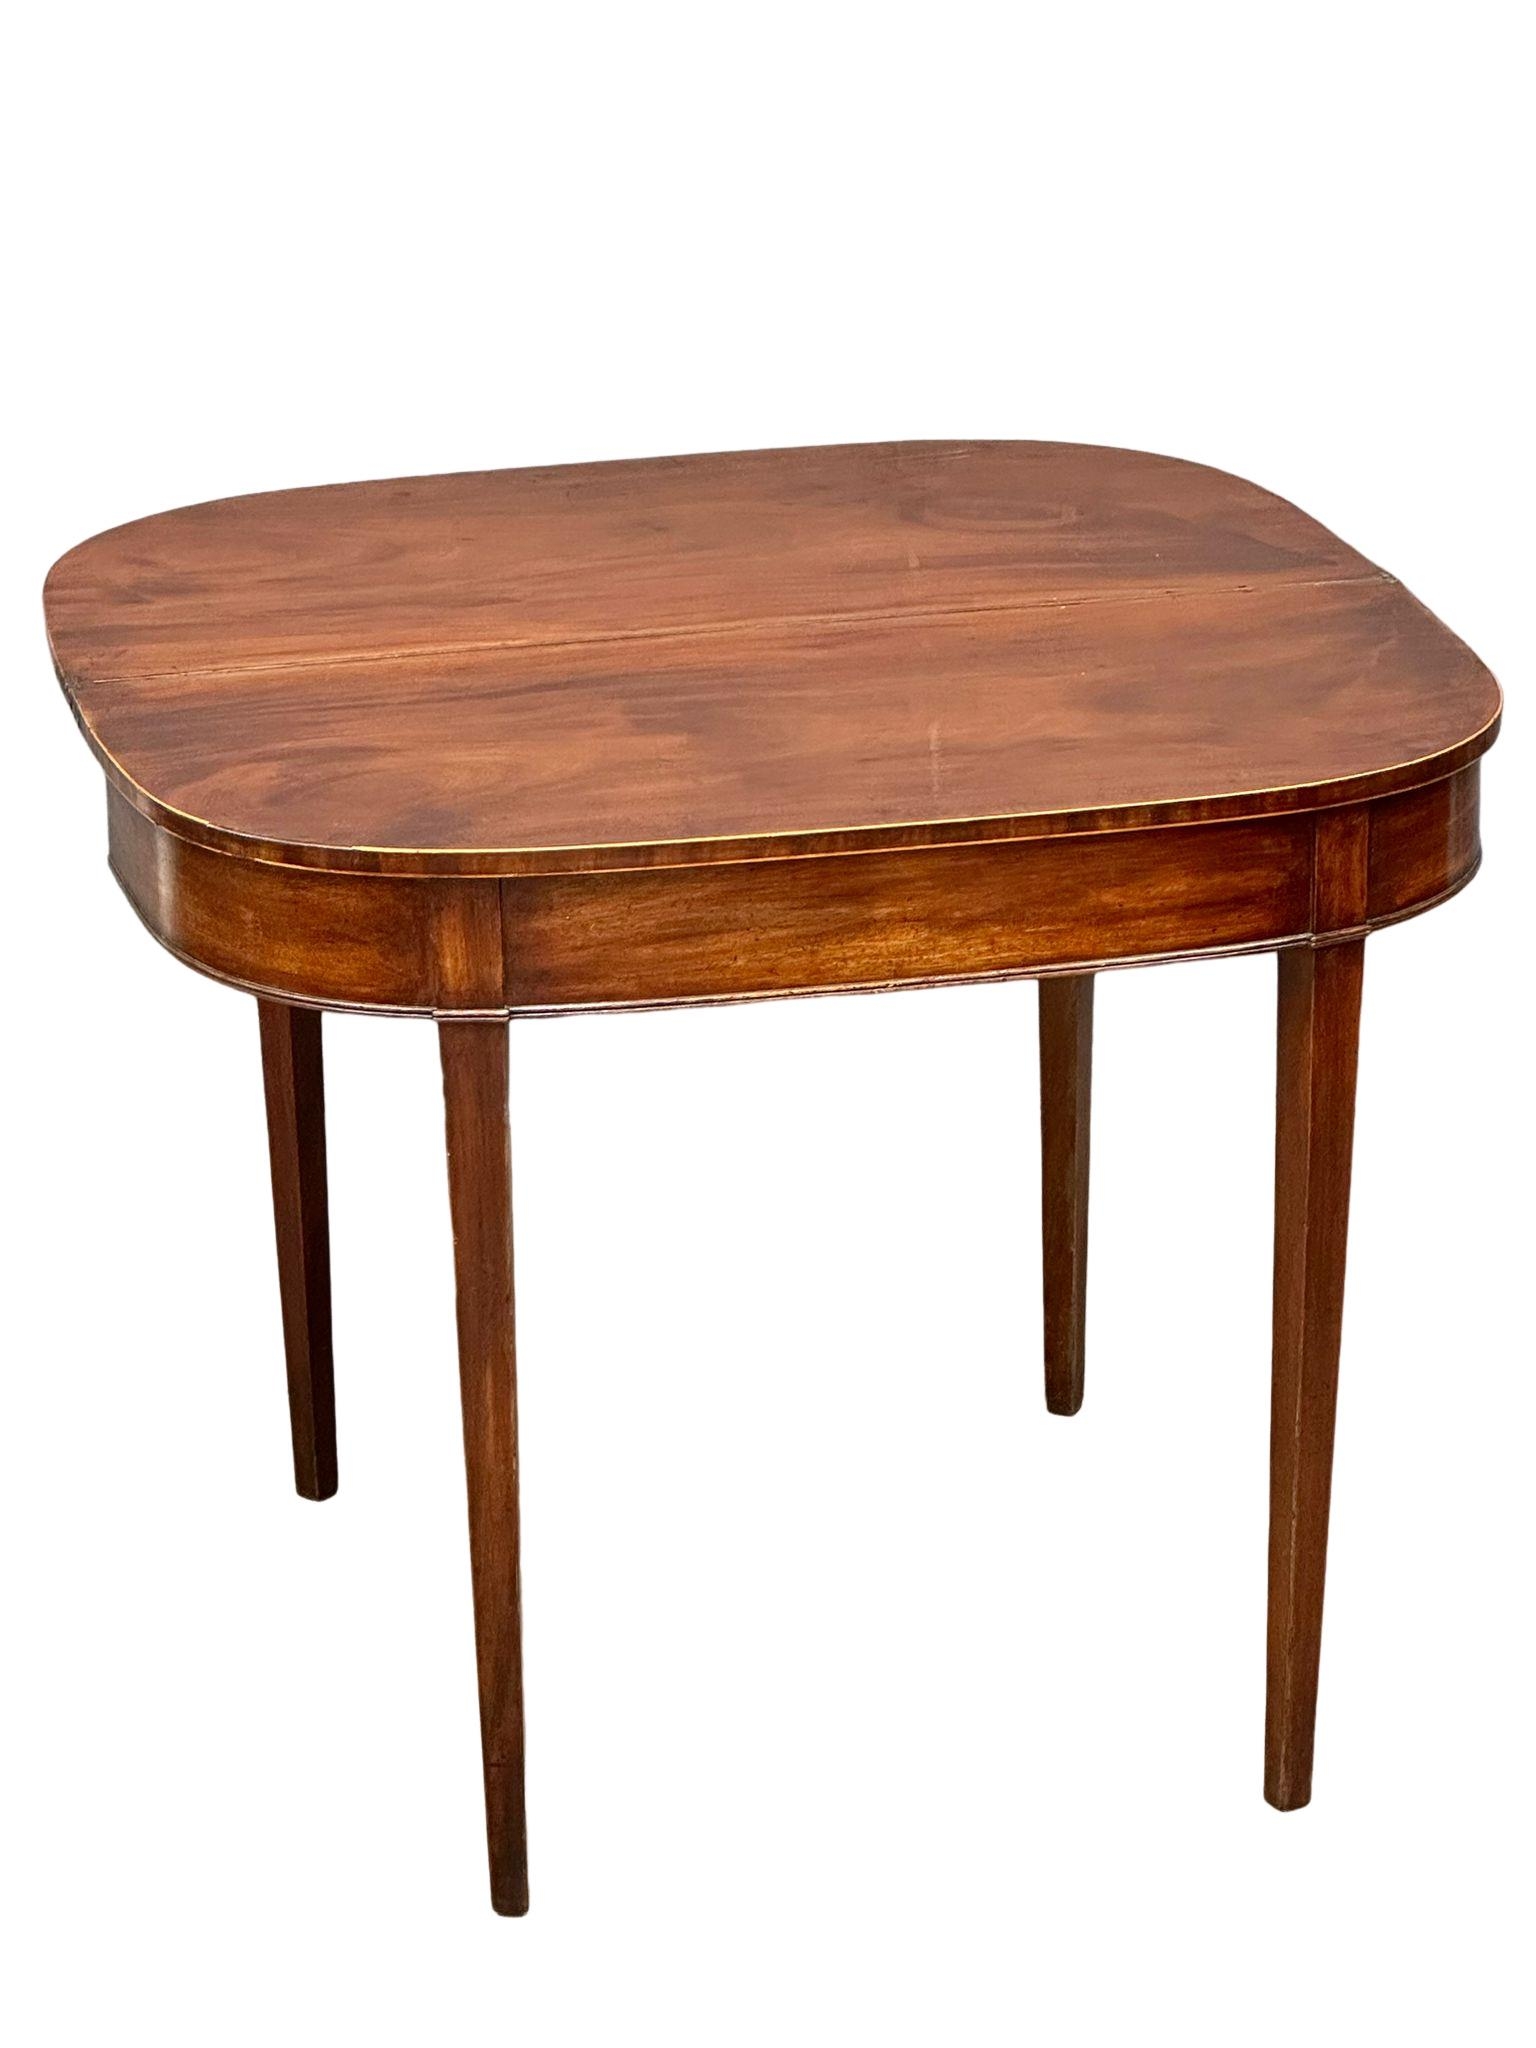 A George III inlaid mahogany turnover tea table. Circa 1800. 91x45.5x73cm - Image 2 of 6